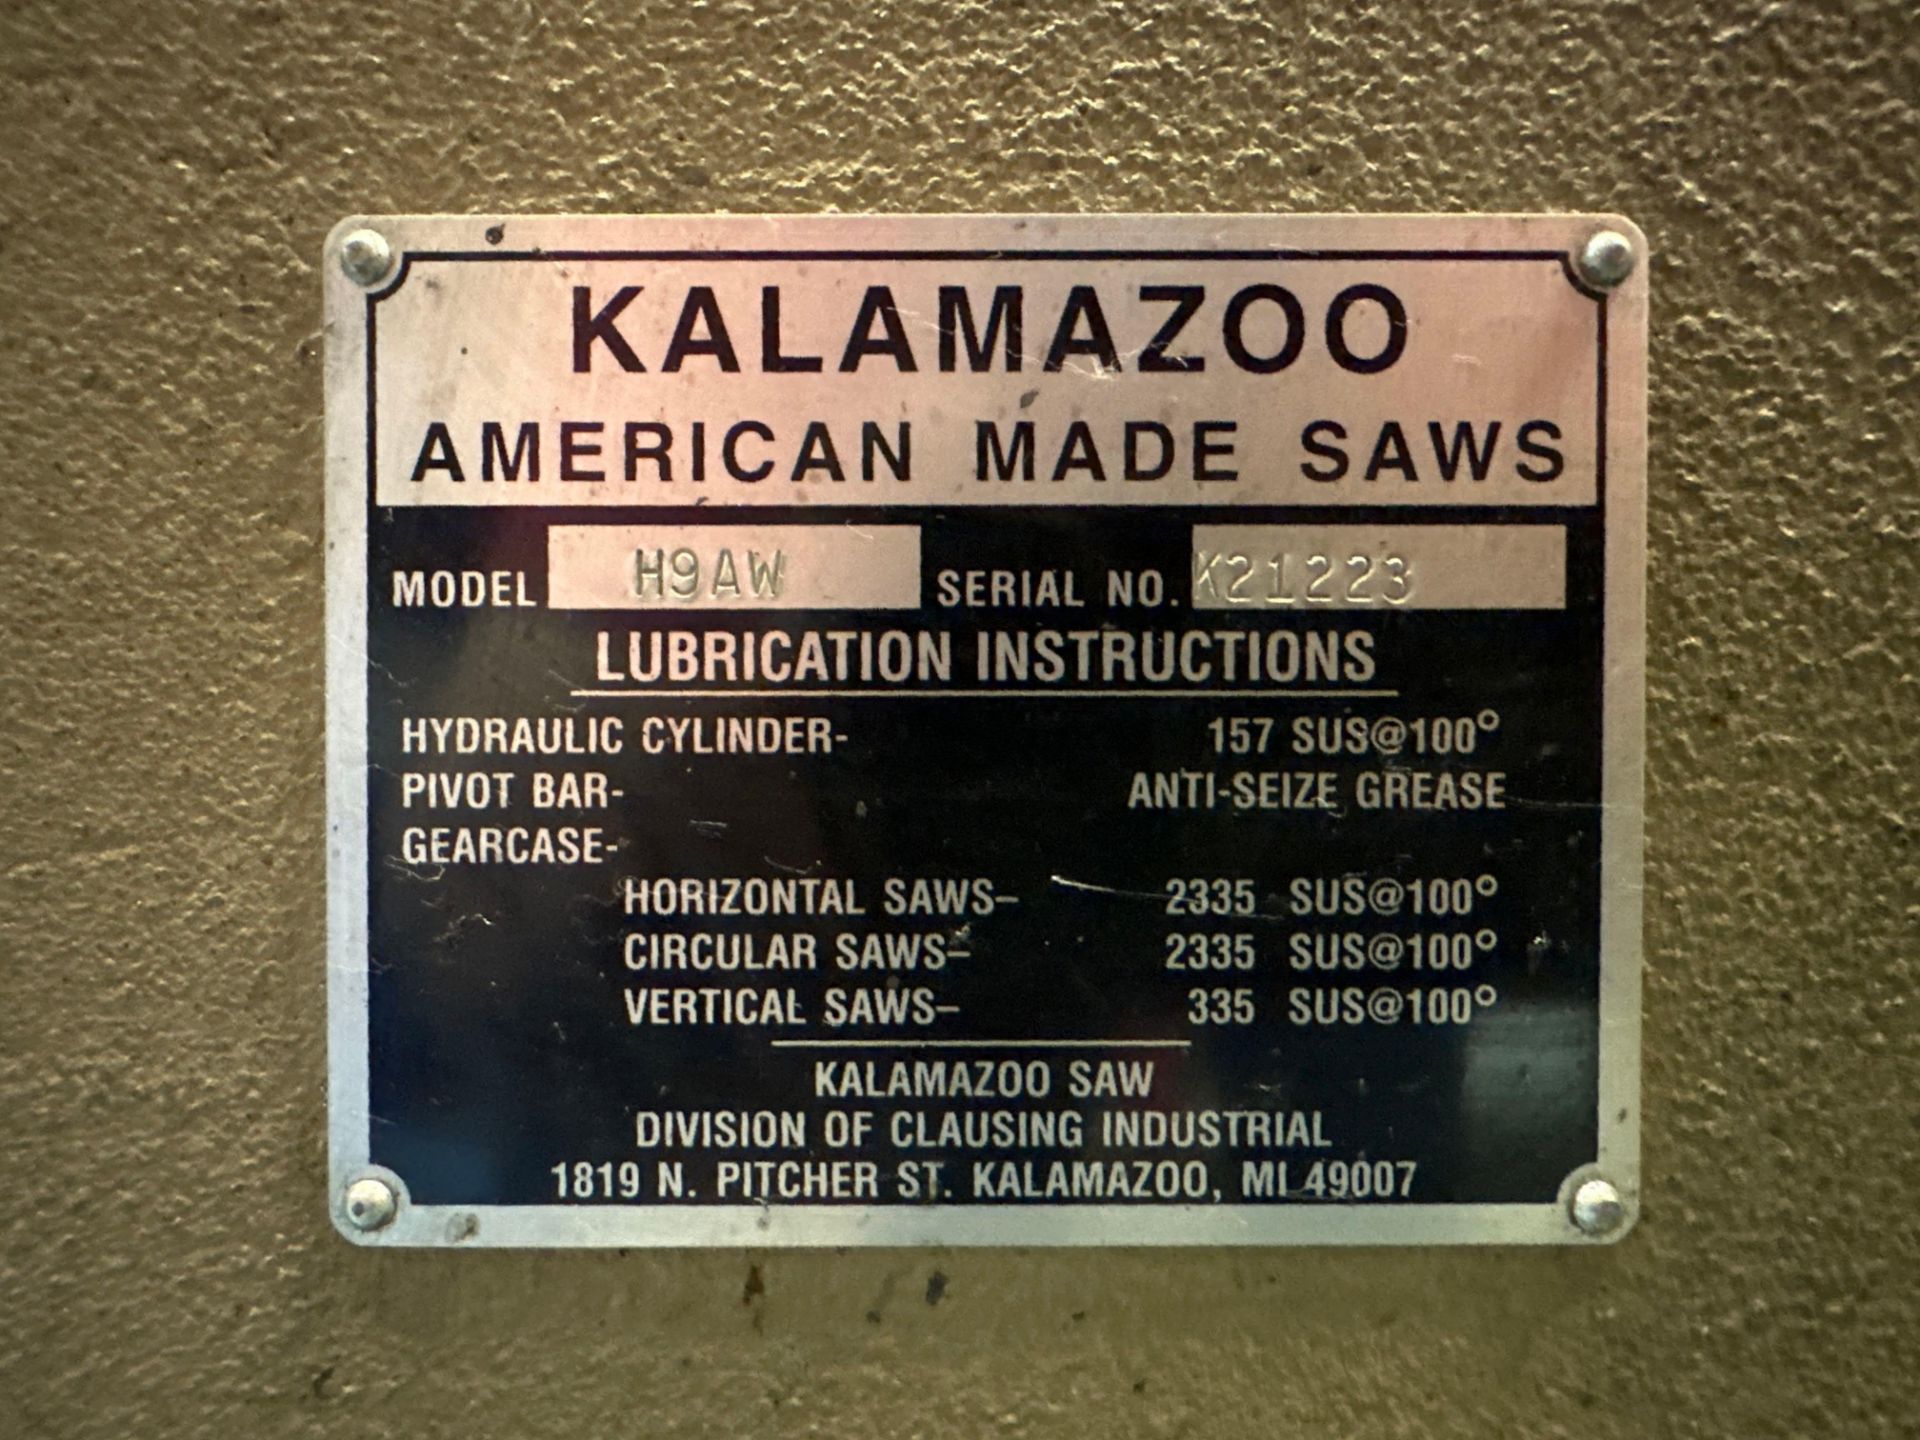 Kalamazoo H9AW Horizontal Bandsaw, s/n K21223 - Image 8 of 8